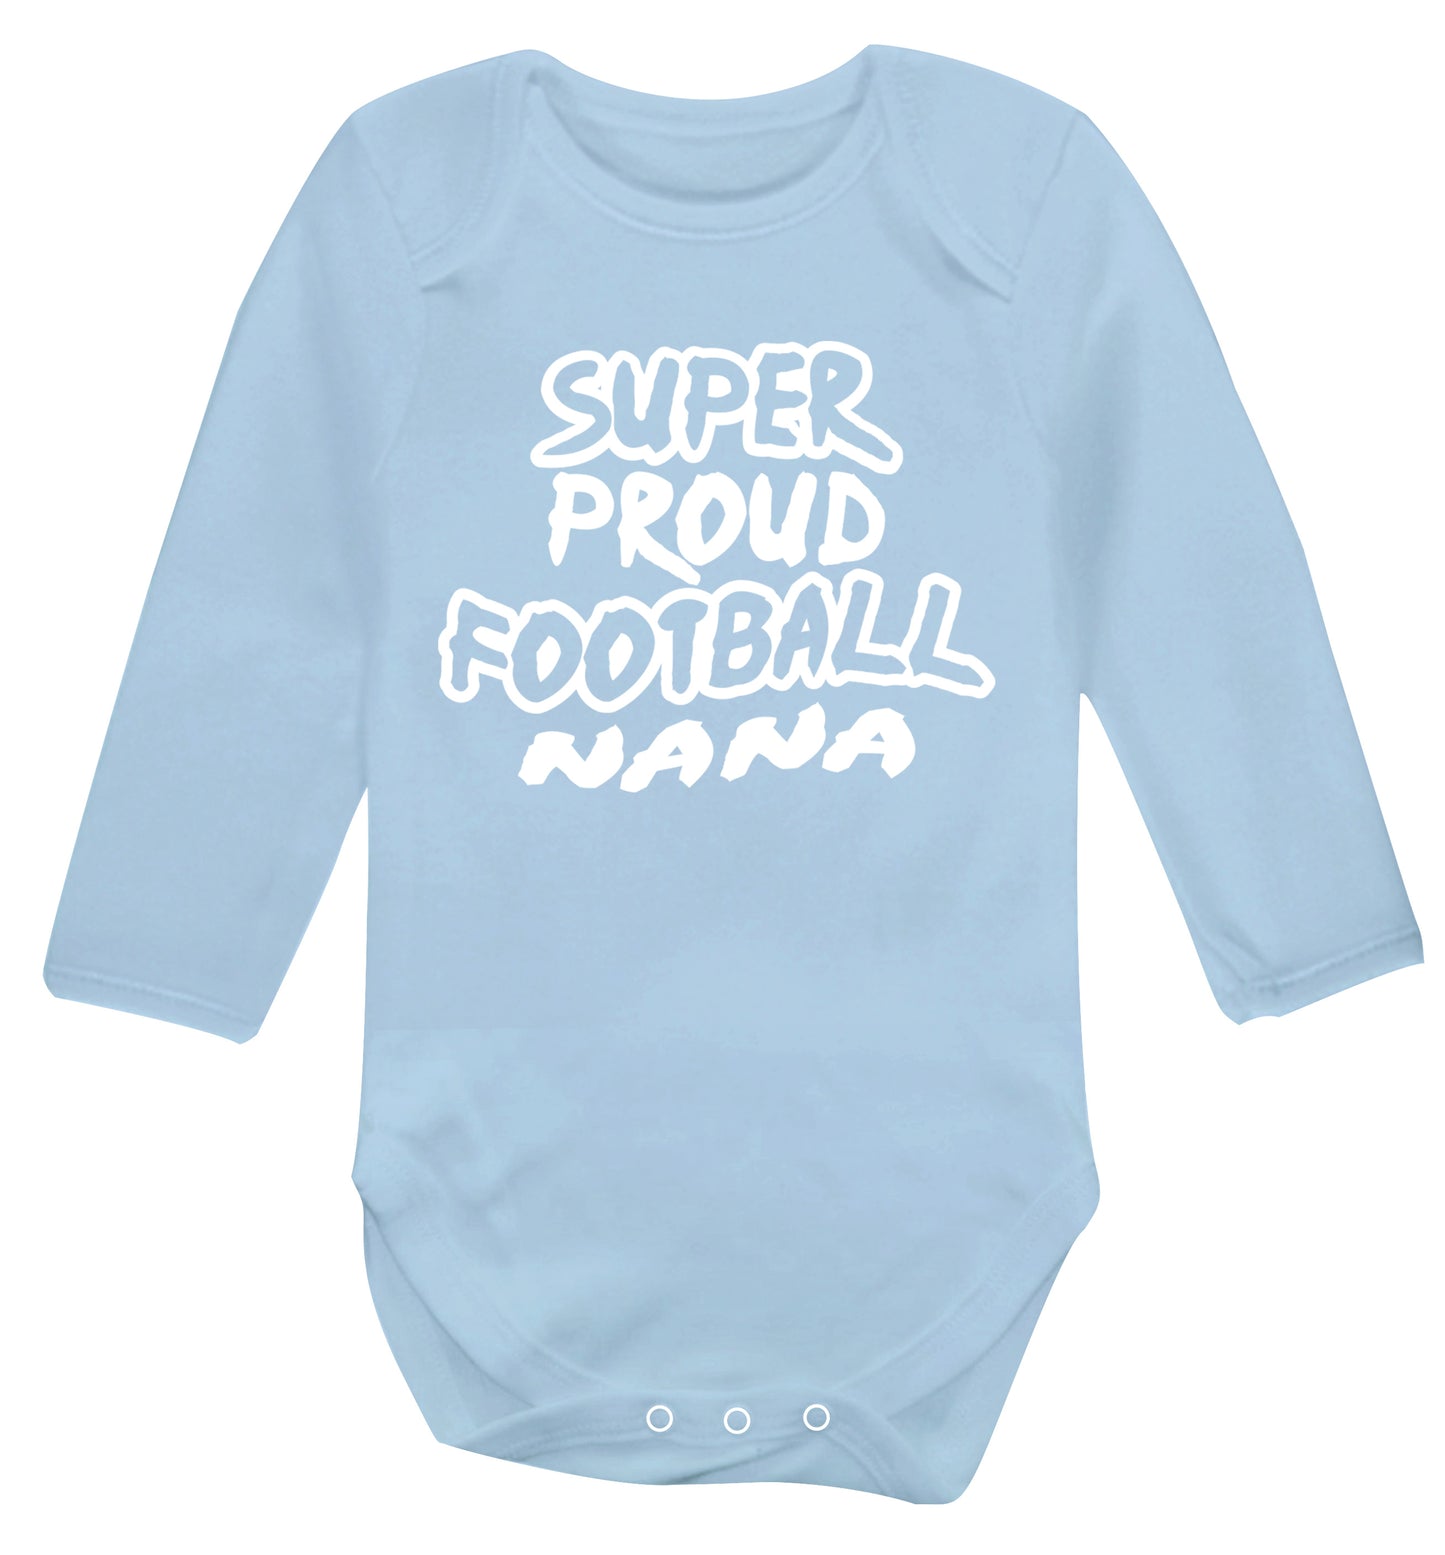 Super proud football nana Baby Vest long sleeved pale blue 6-12 months